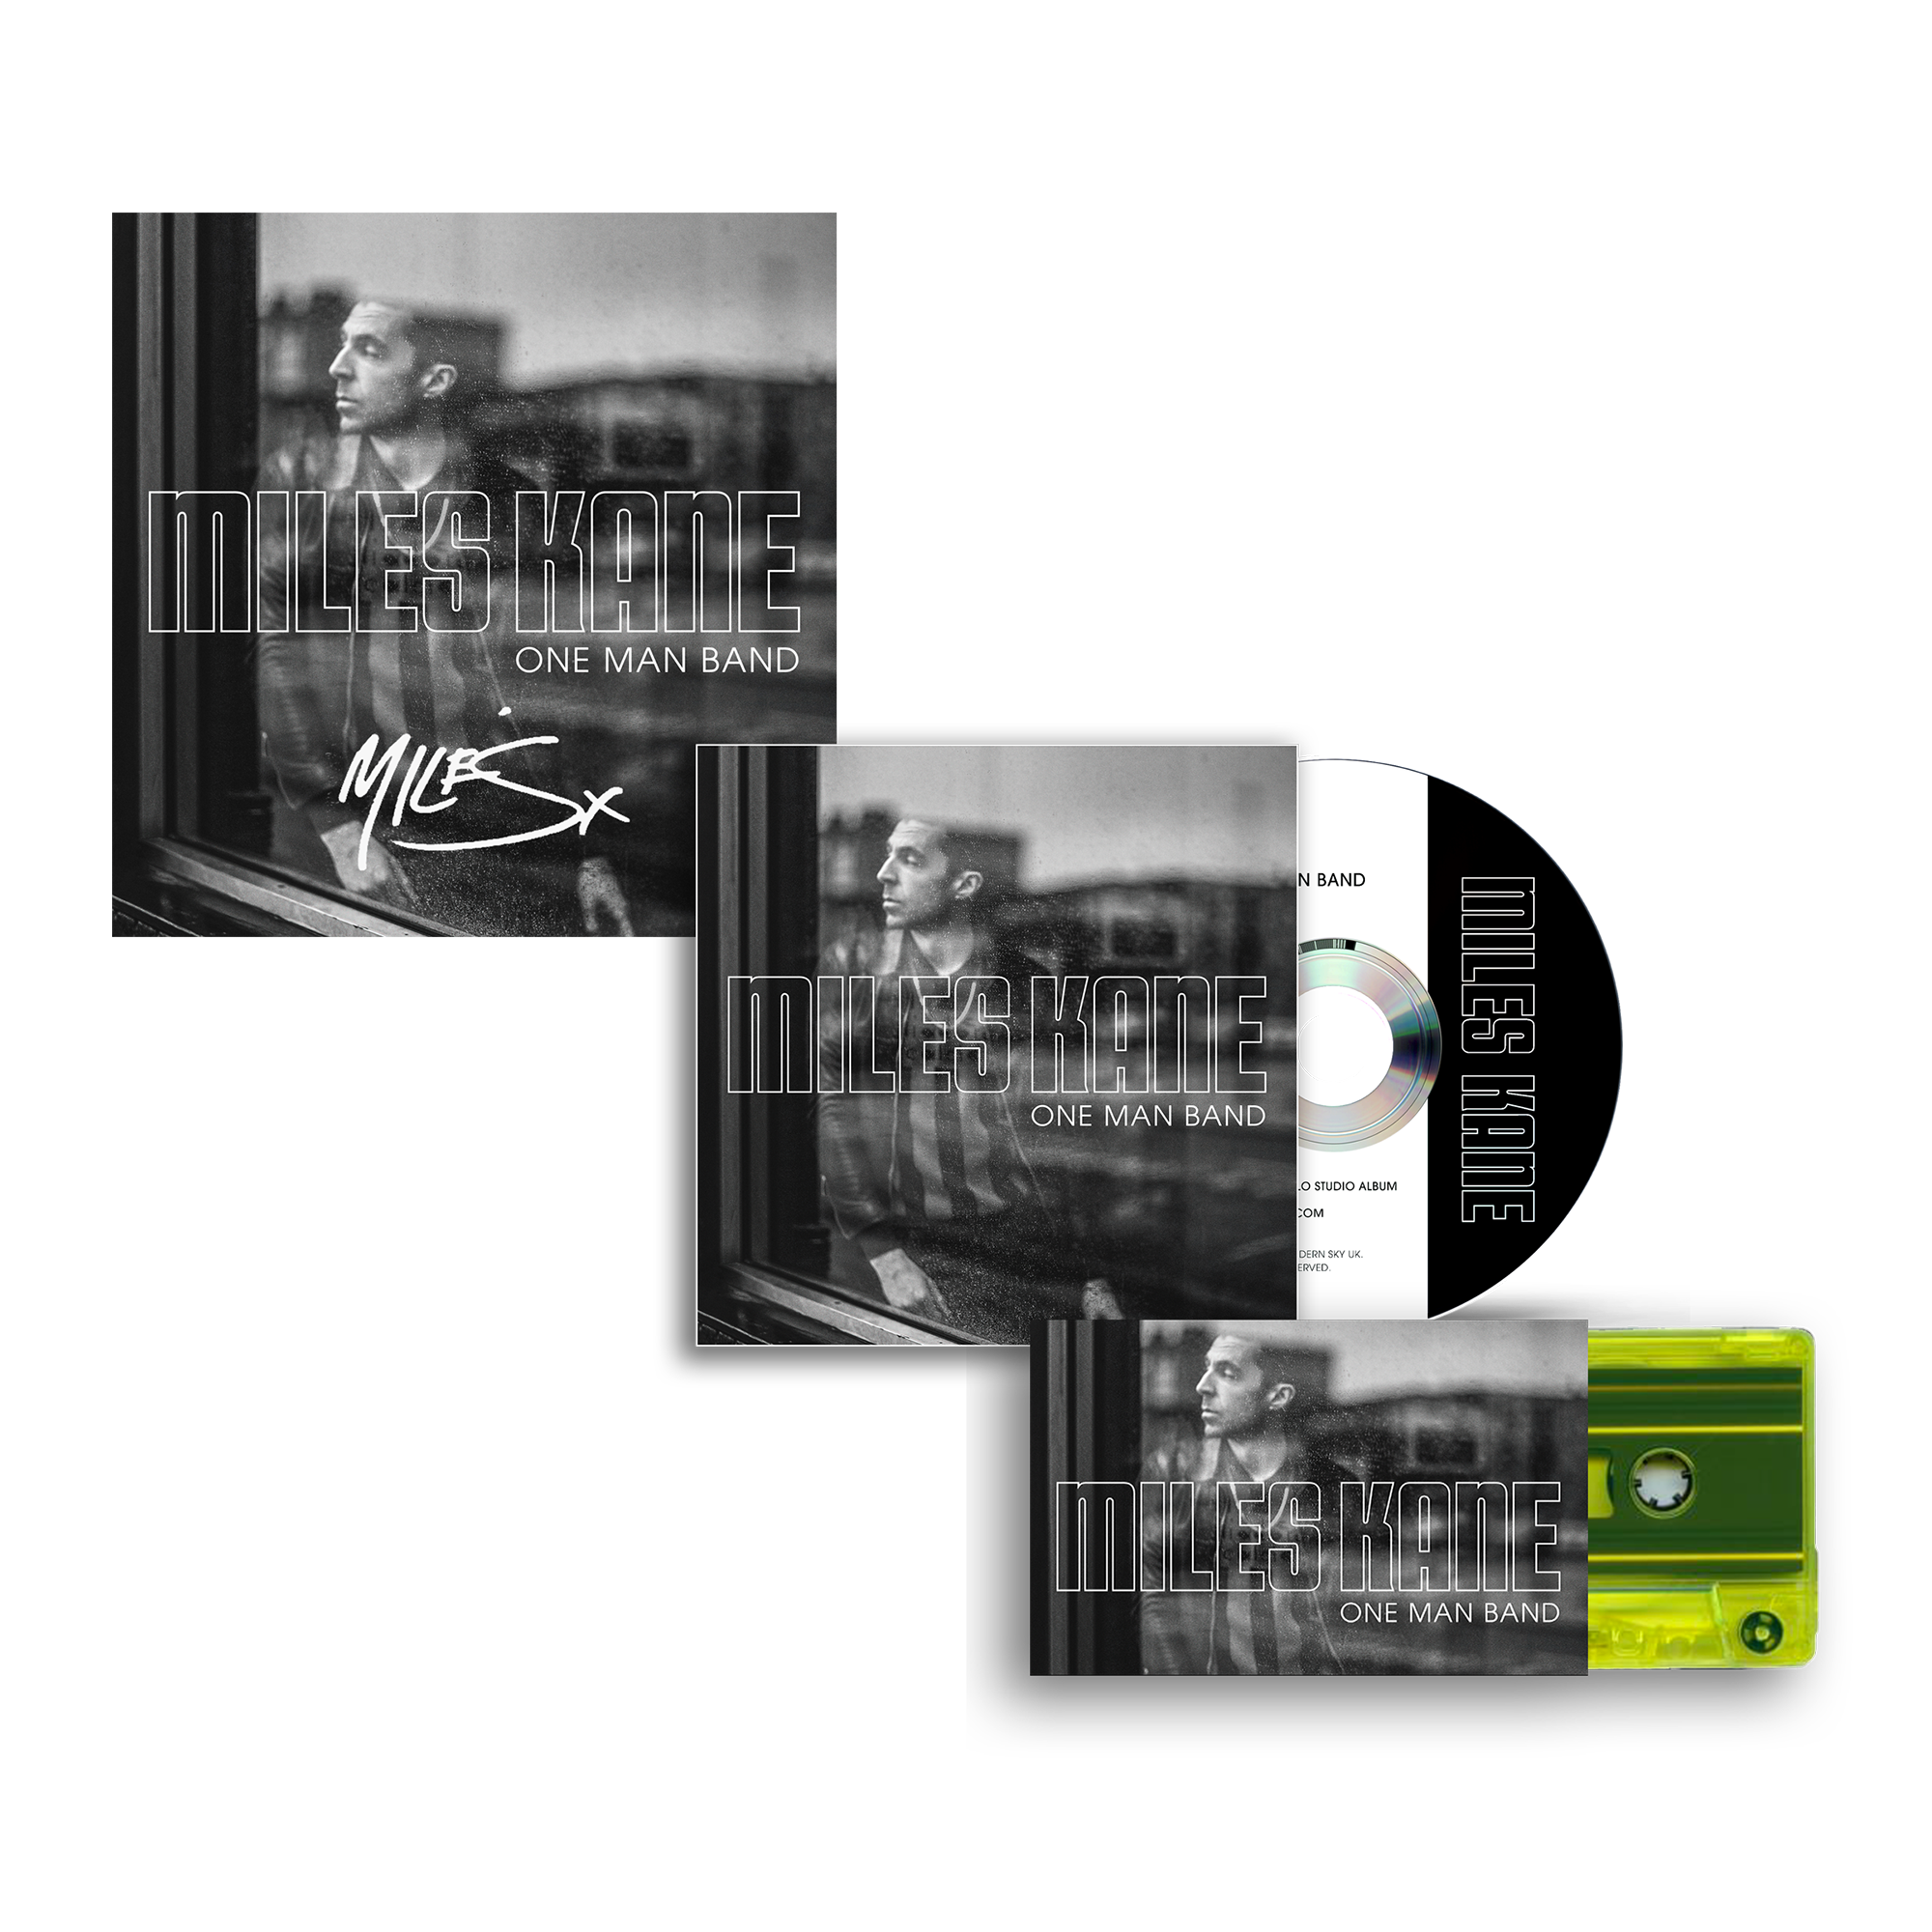 Standard CD + Cassette (Yellow/Black) Bundle + Signed Print